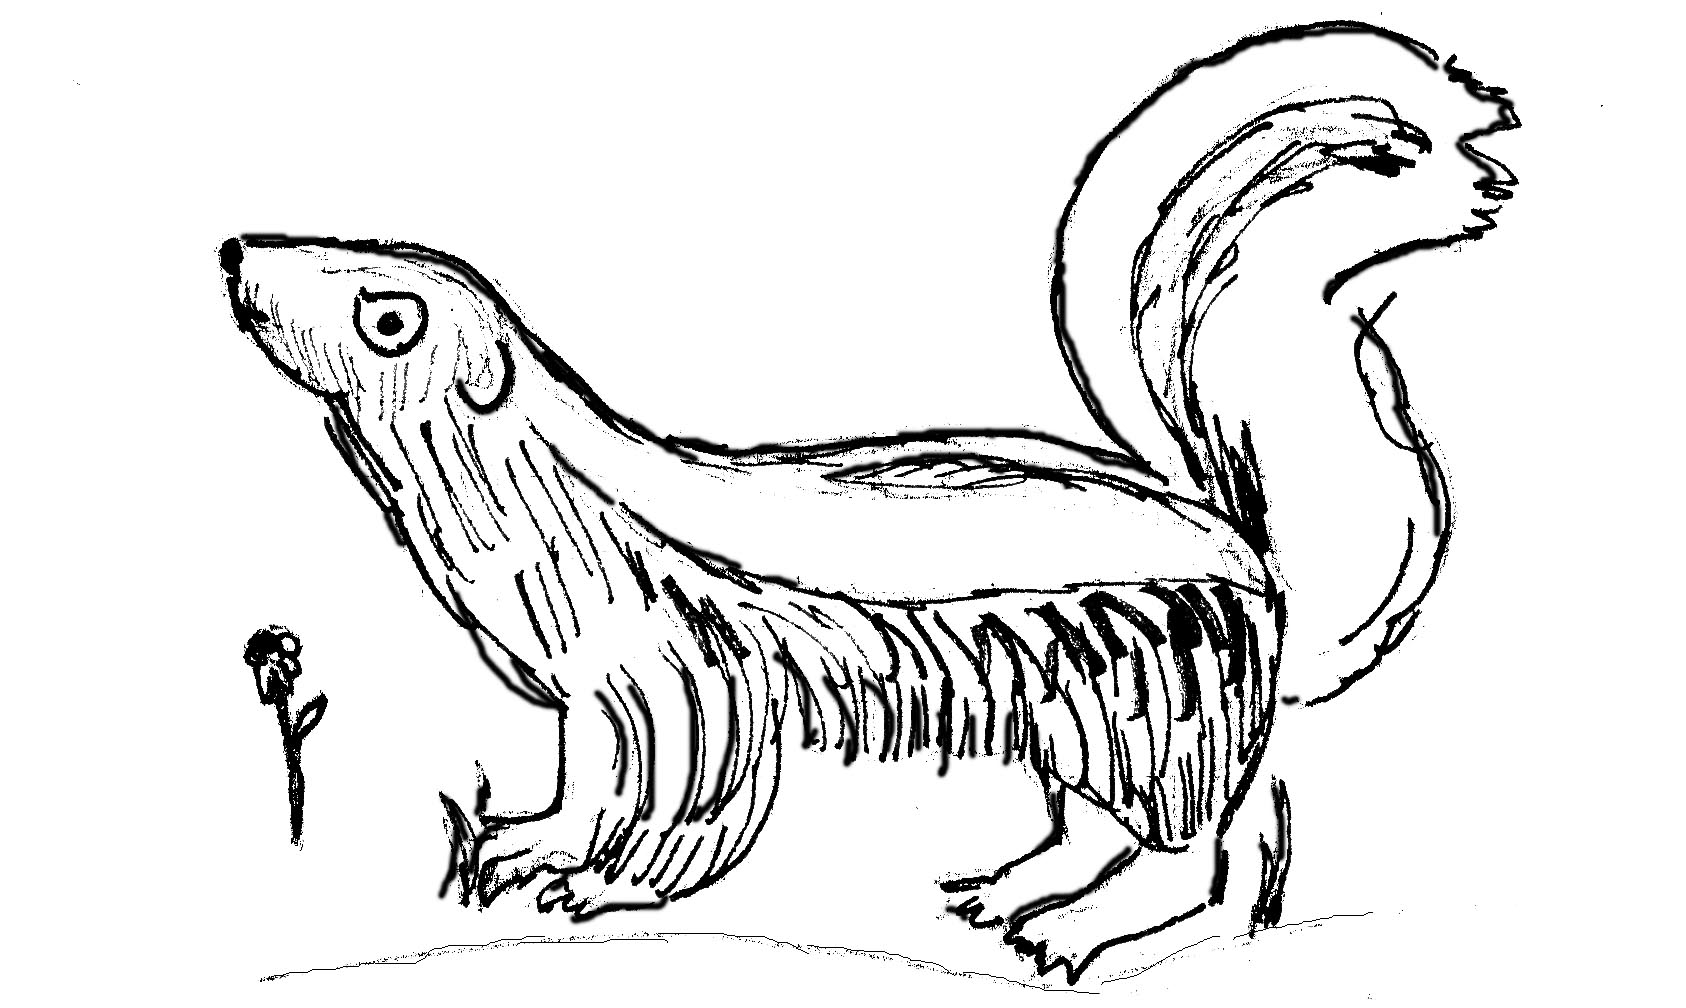 Illustration of skunk